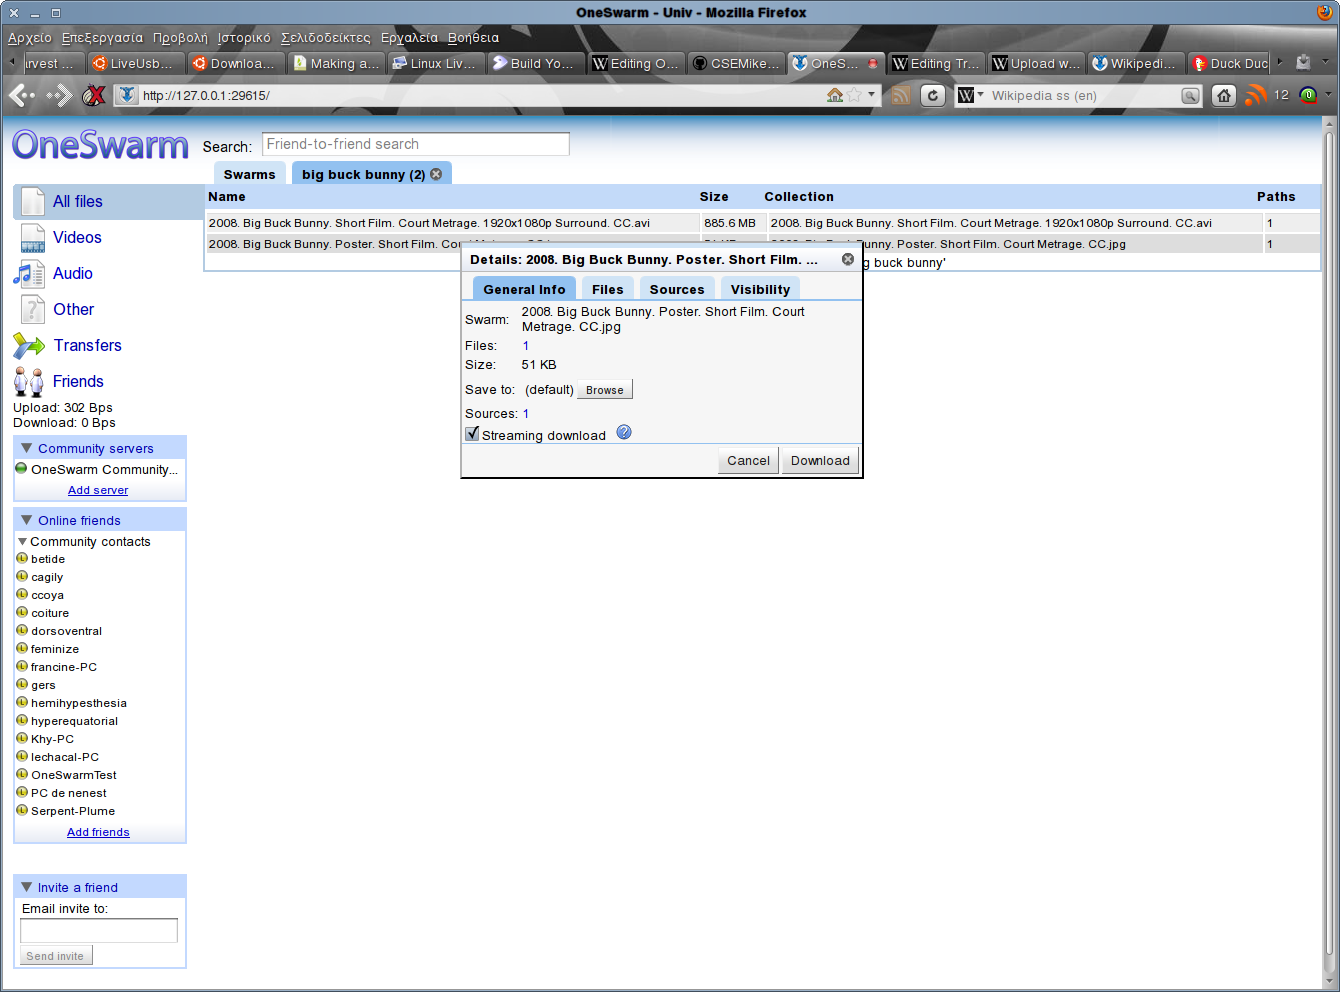 Screenshot-OneSwarm_2_-_Mozilla_Firefox.png